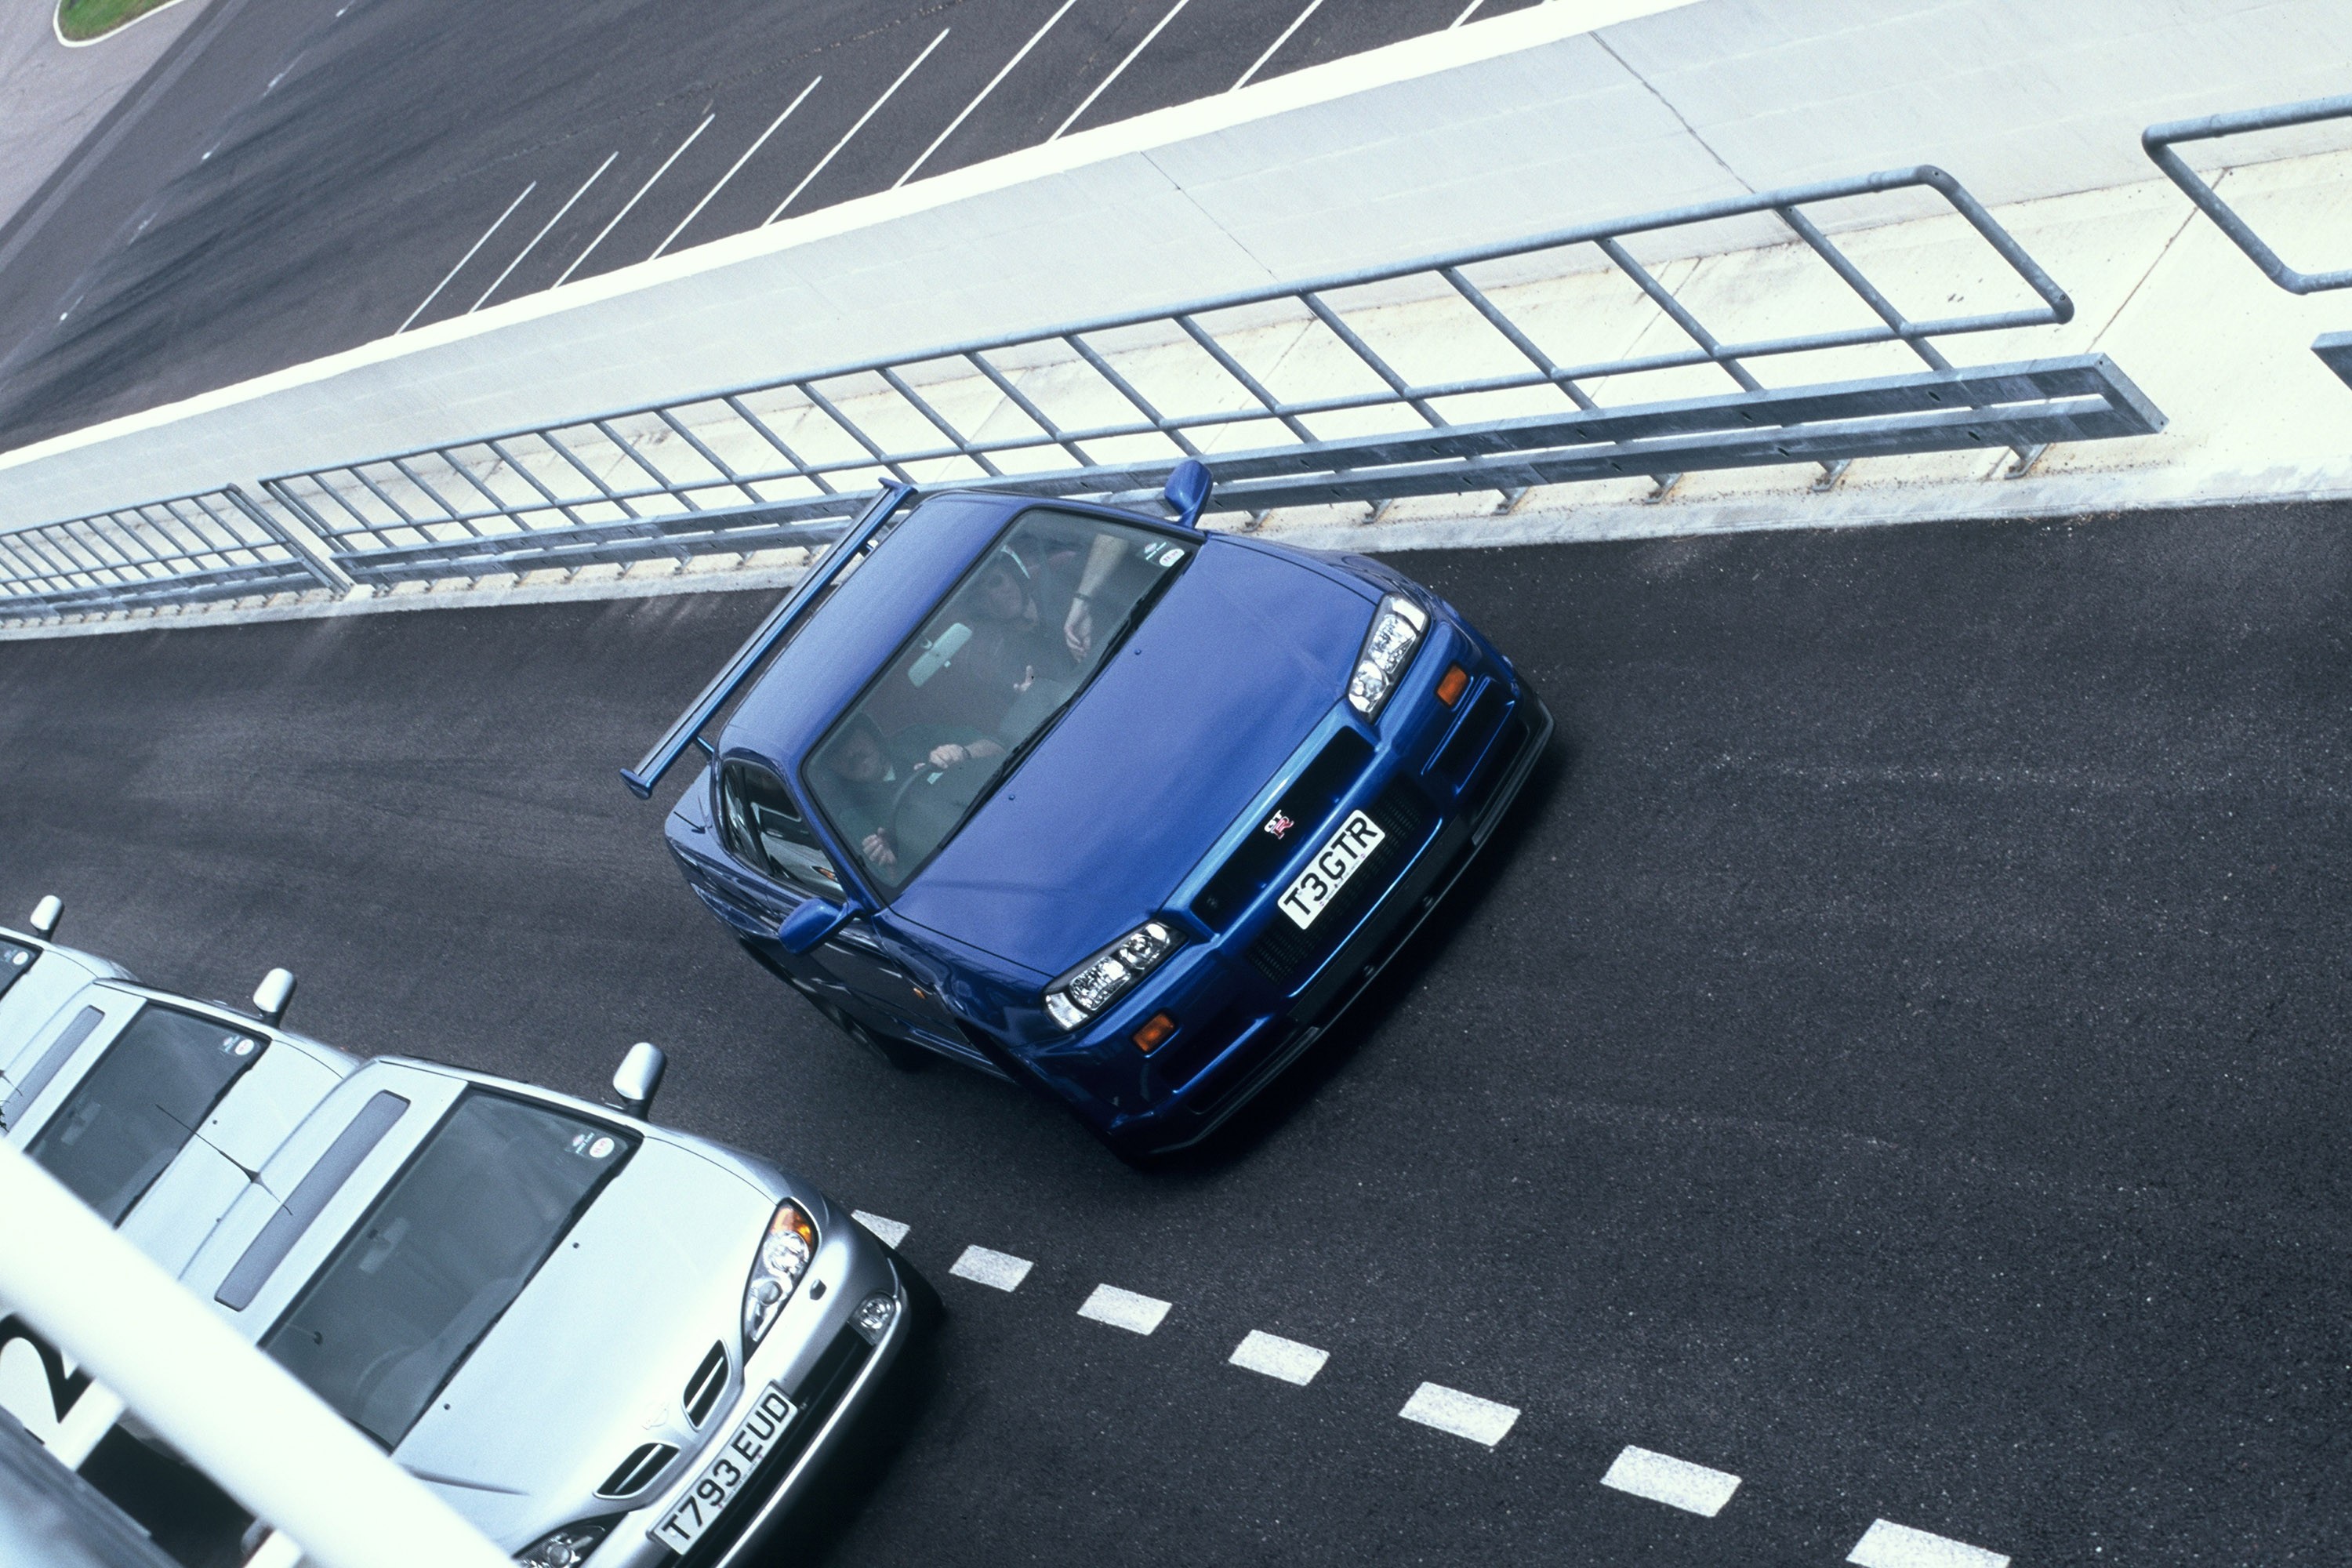 синий, автомобили, фронт, Ниссан, транспортные средства, трек, Nissan Primera, Nissan Skyline R34 GT-R, вид спереди угол - обои на рабочий стол